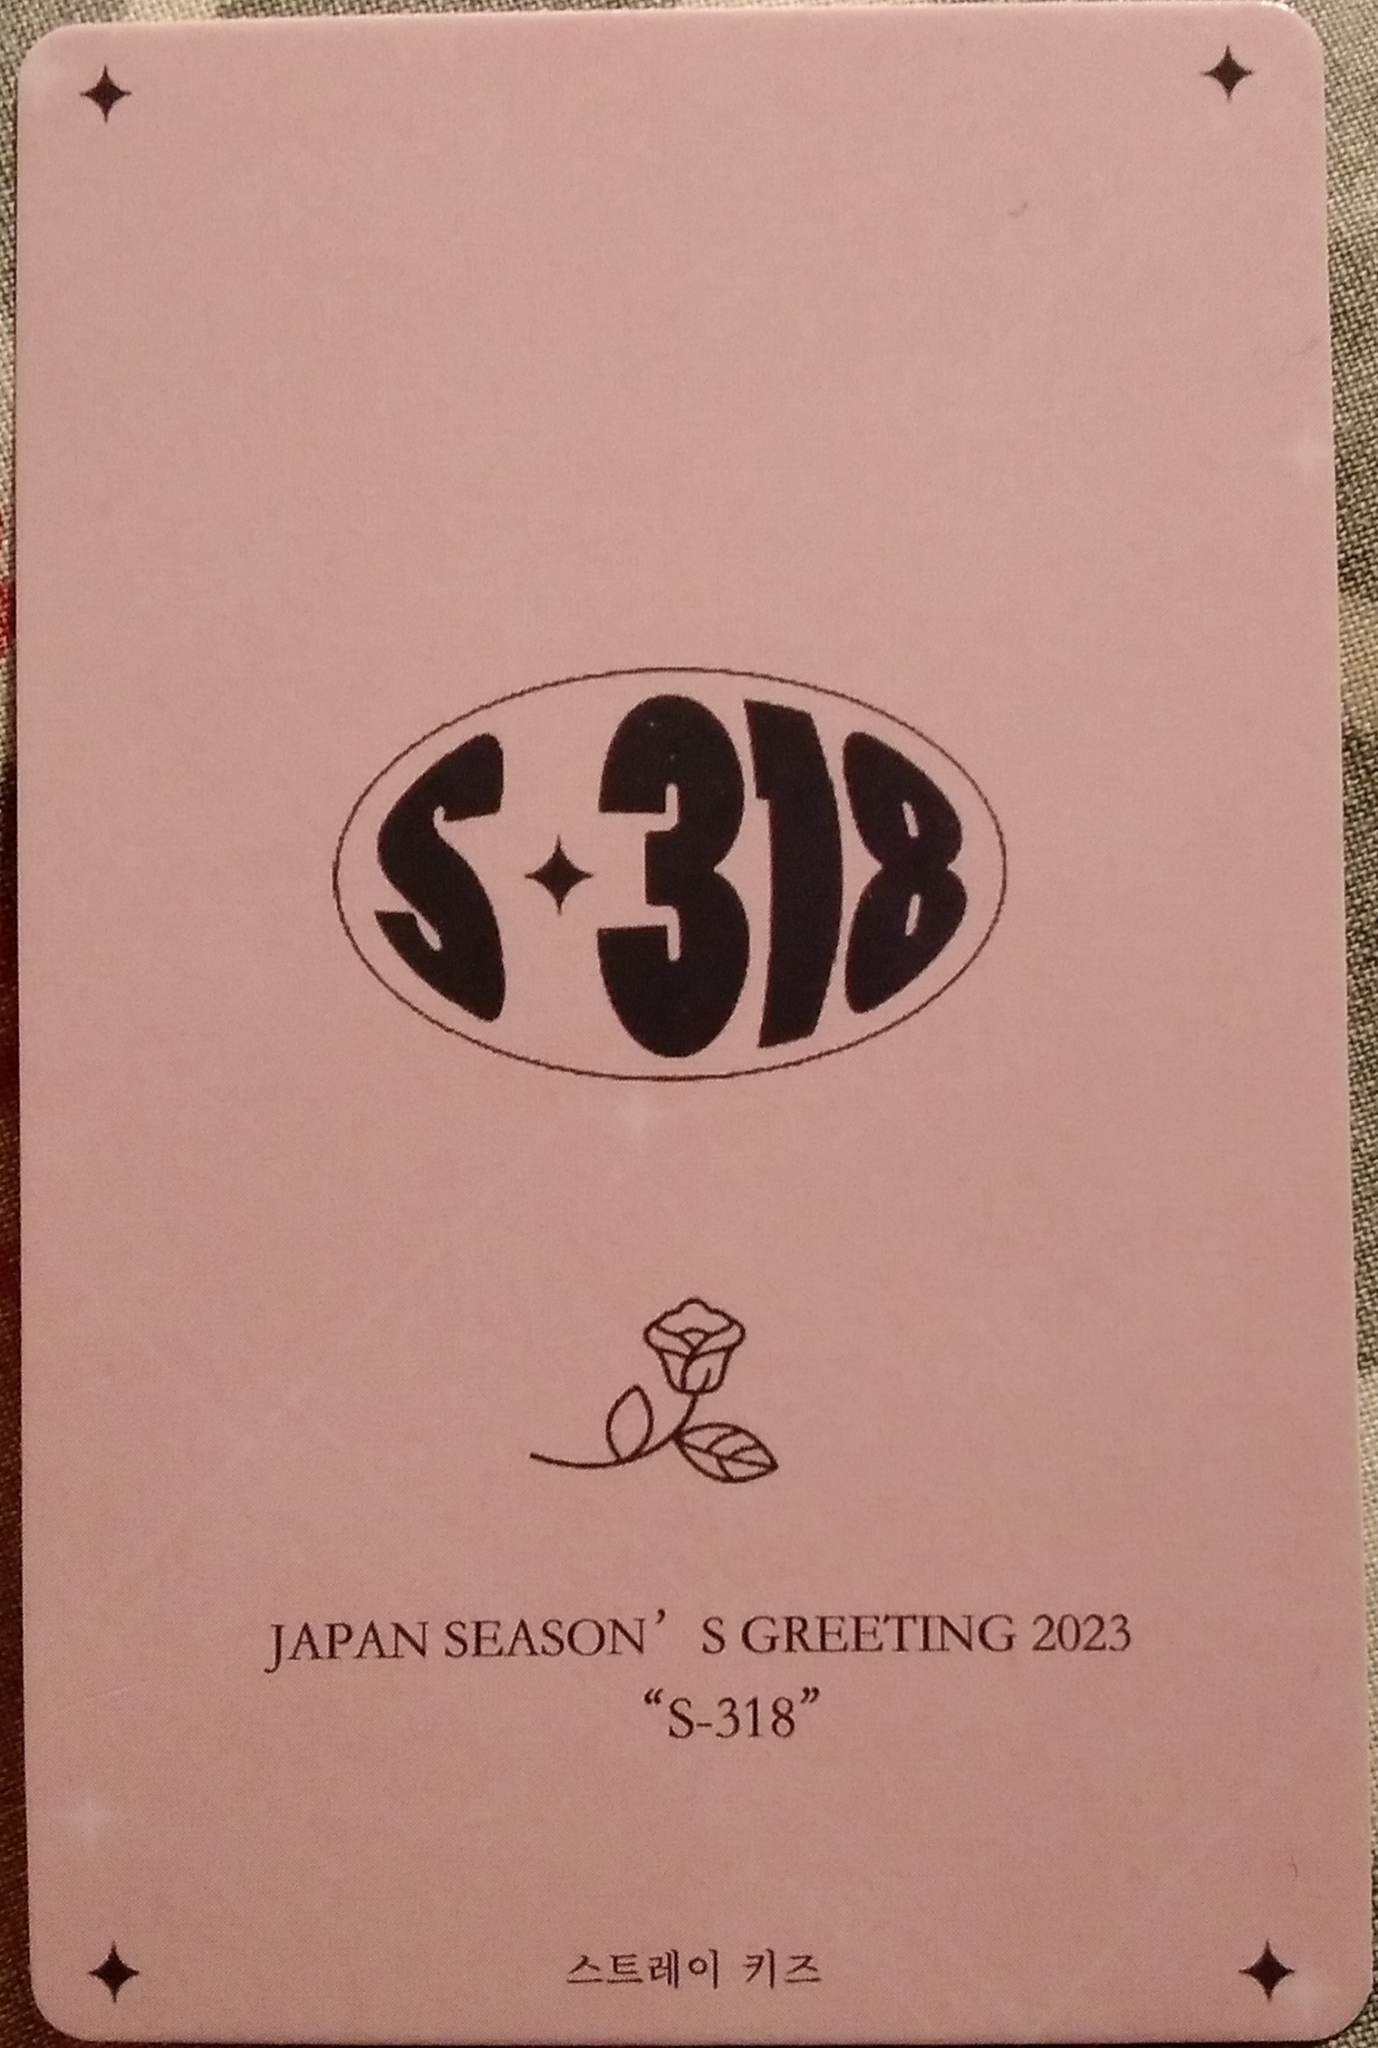 Photocard  STRAYKIDS  Japan season s greetings 2023  "S-318"  Han jisung